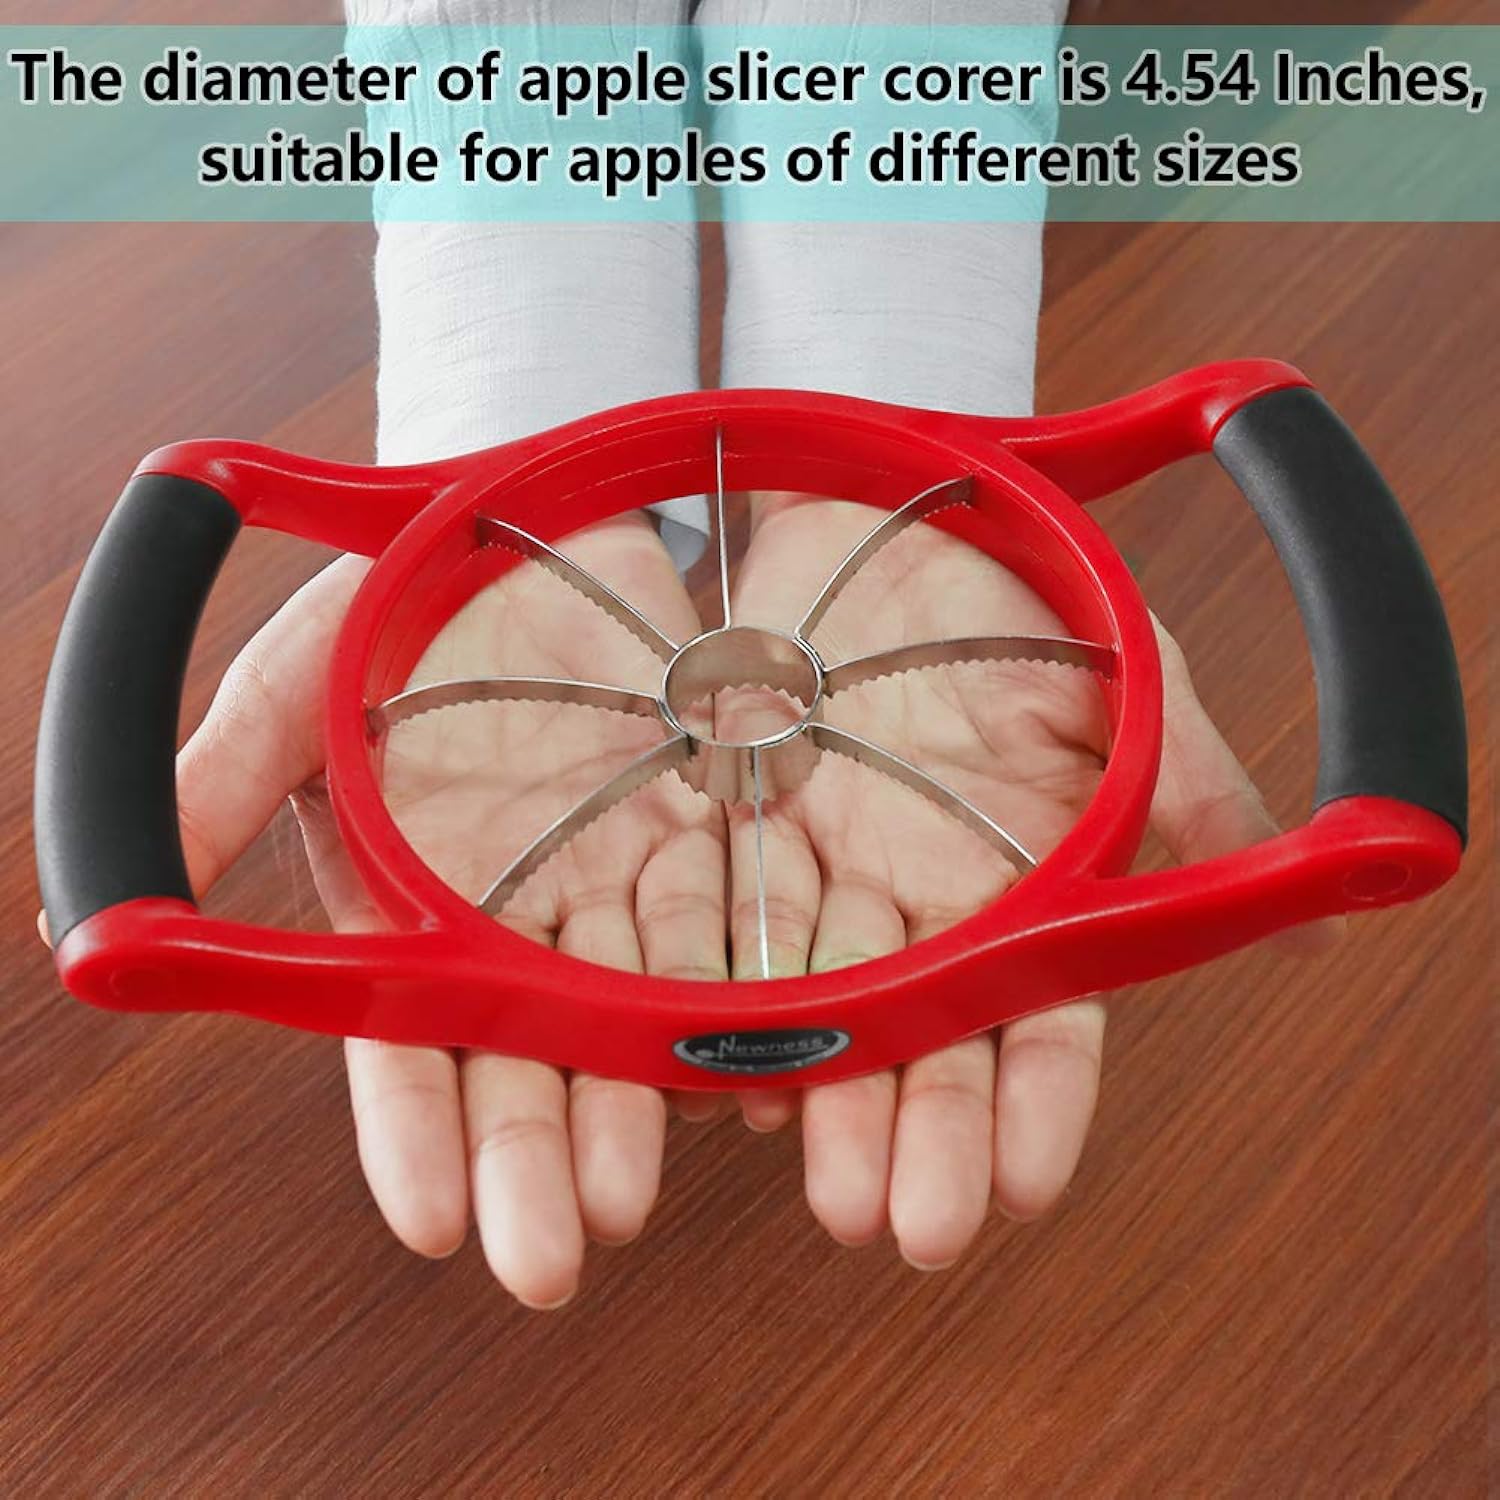 Great Choice Products Apple Slicer Corer, [Large Size], Newness Premium Apple Slicer Corer, Cutter, Divider, Wedger, Stainless Steel Apple Slicer W…